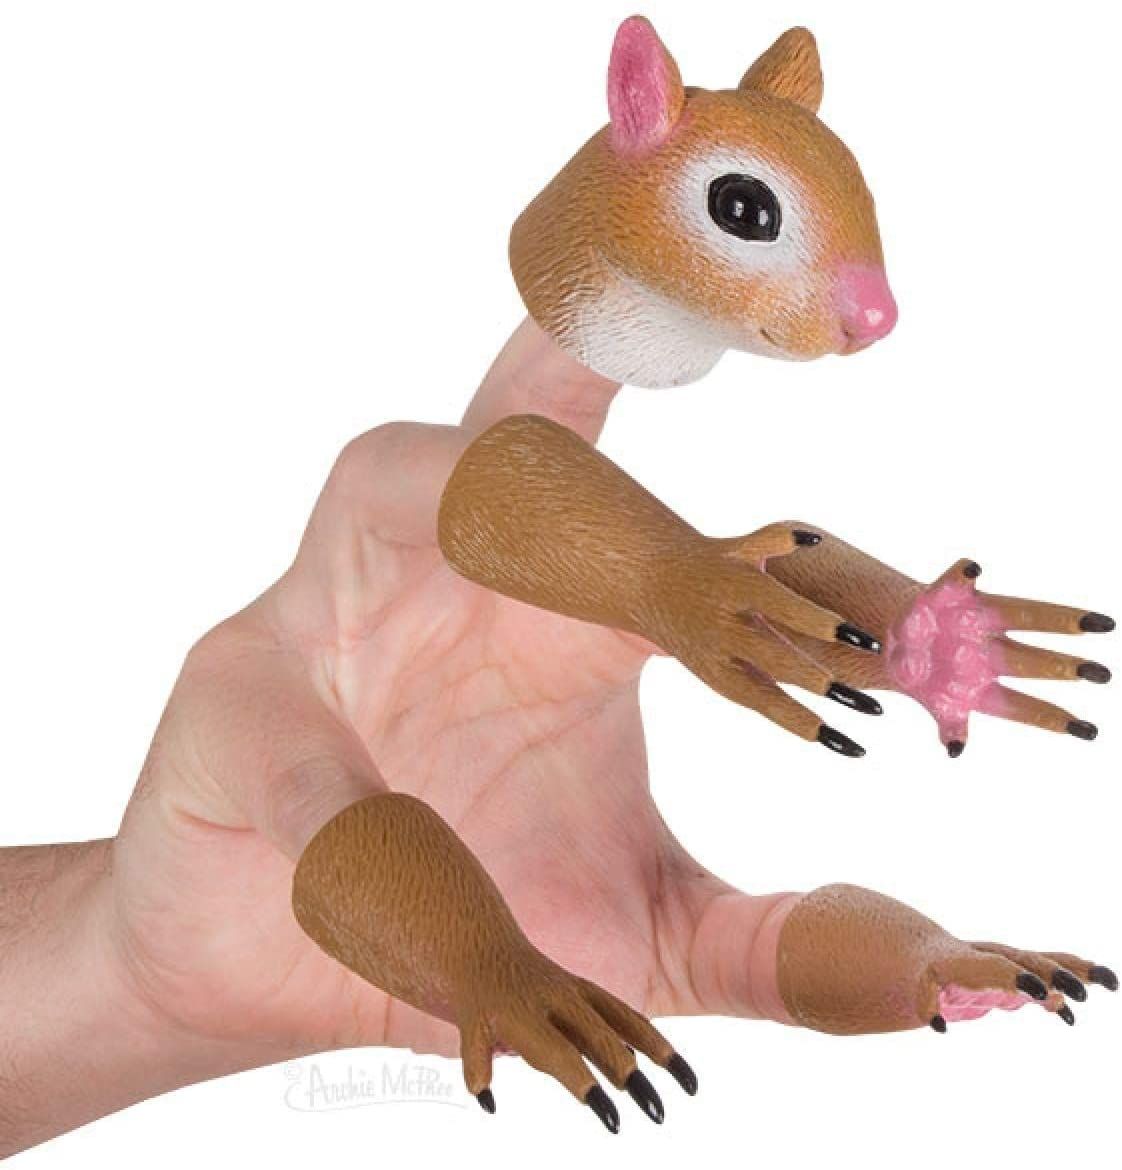 Squirrel hands